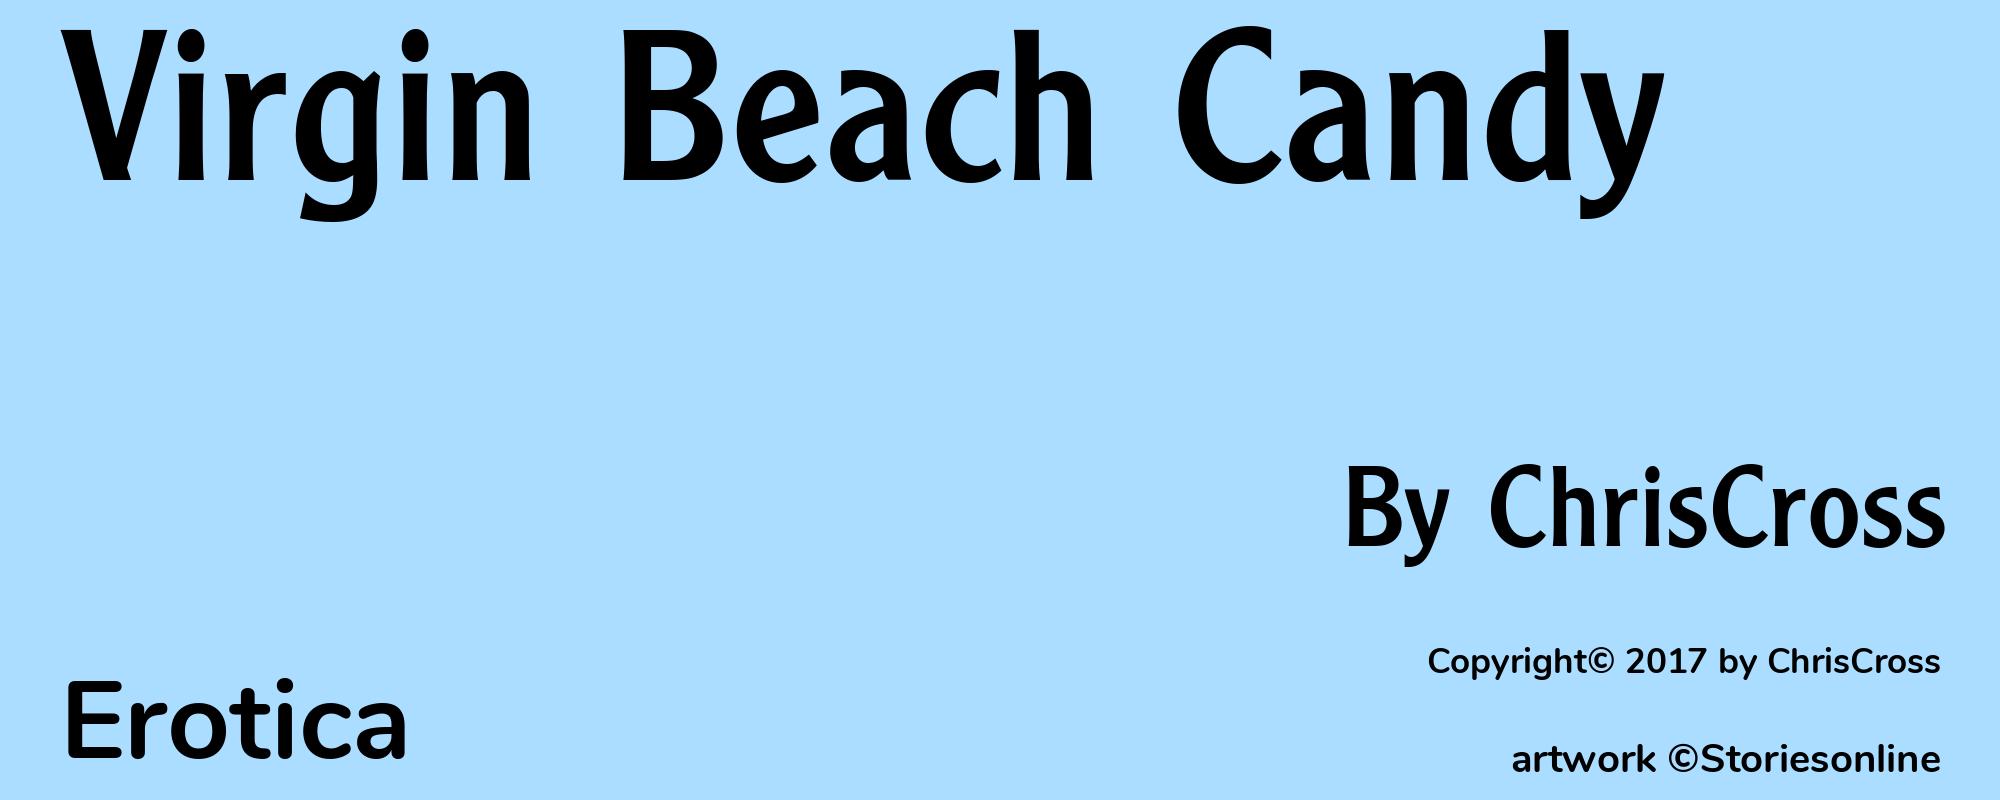 Virgin Beach Candy - Cover